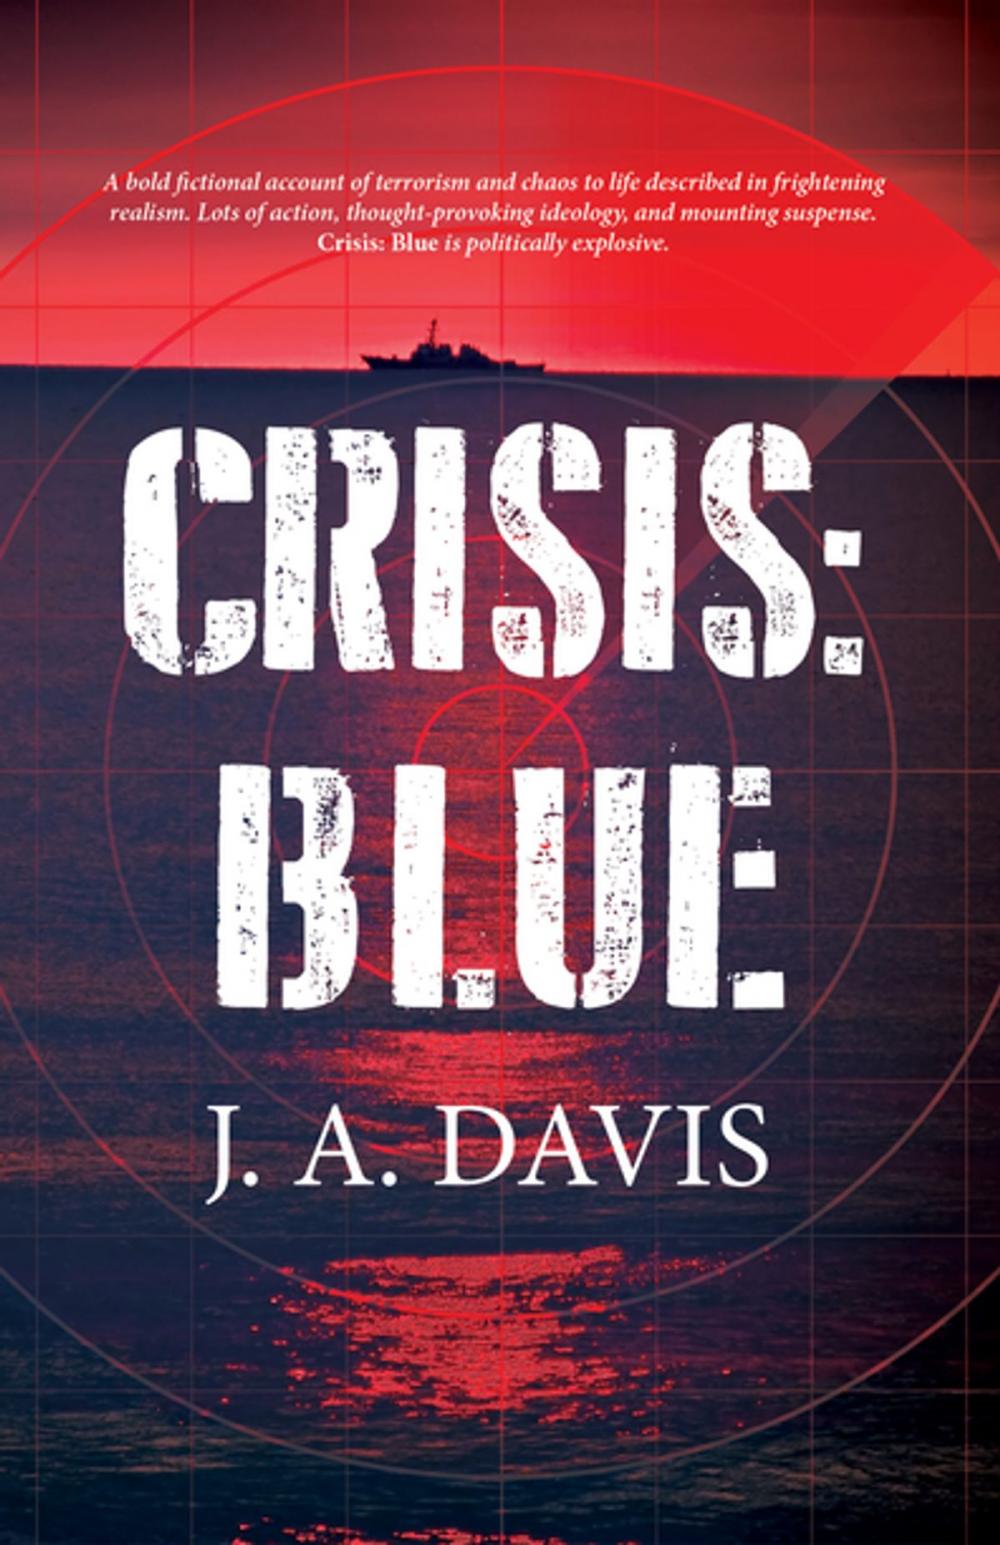 Big bigCover of Crisis: Blue